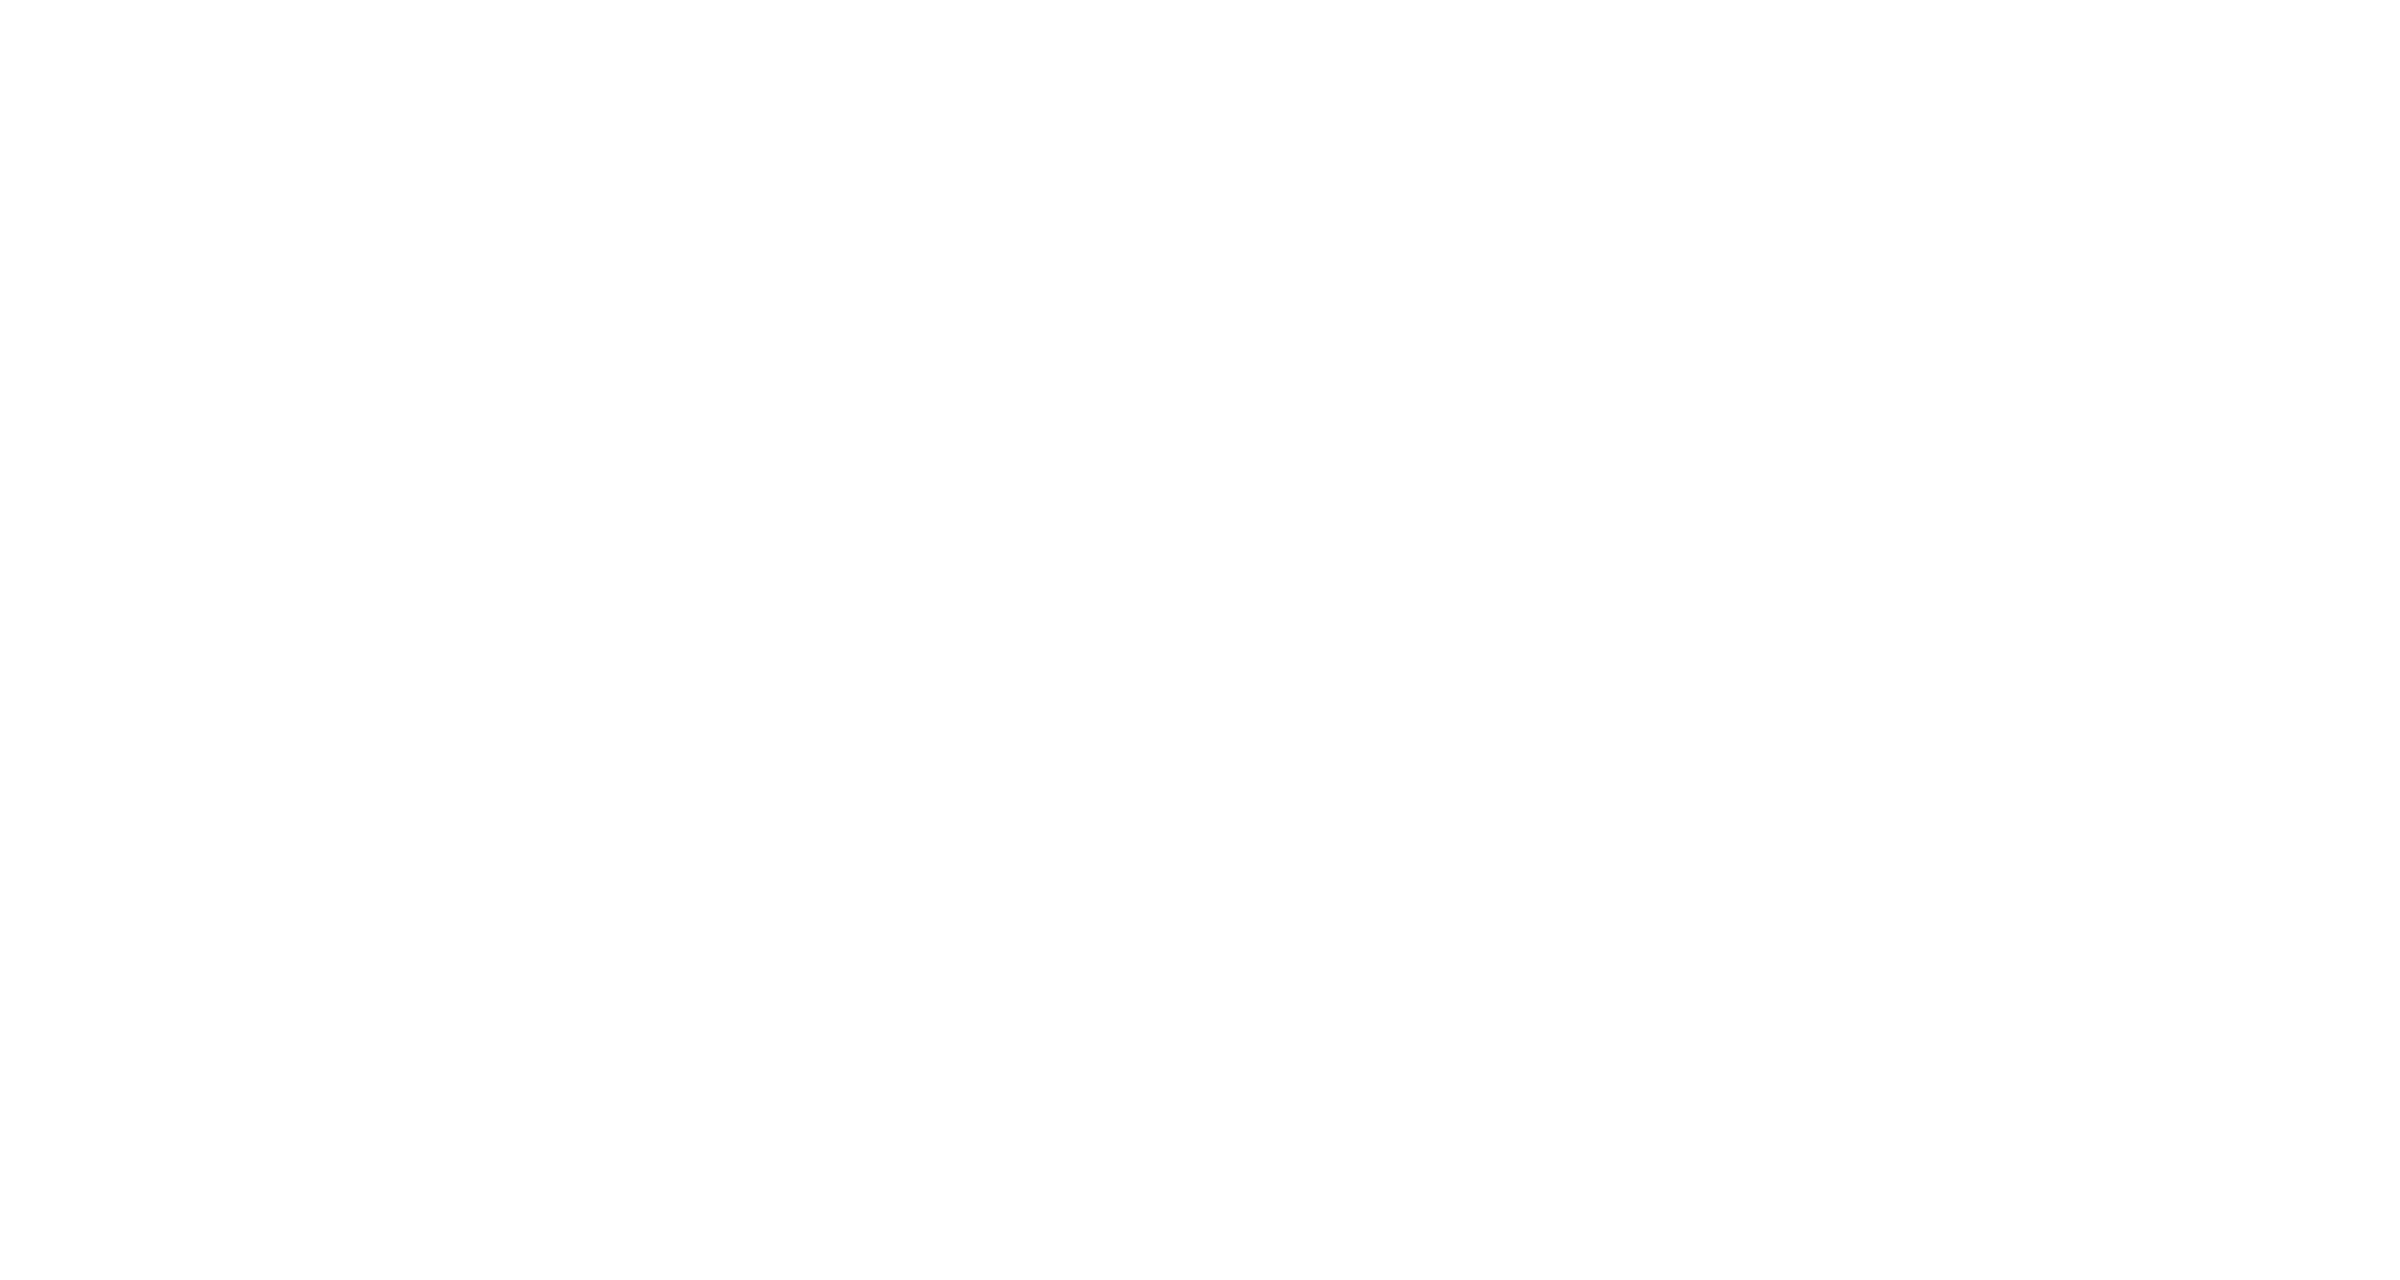 The Horizon project logo